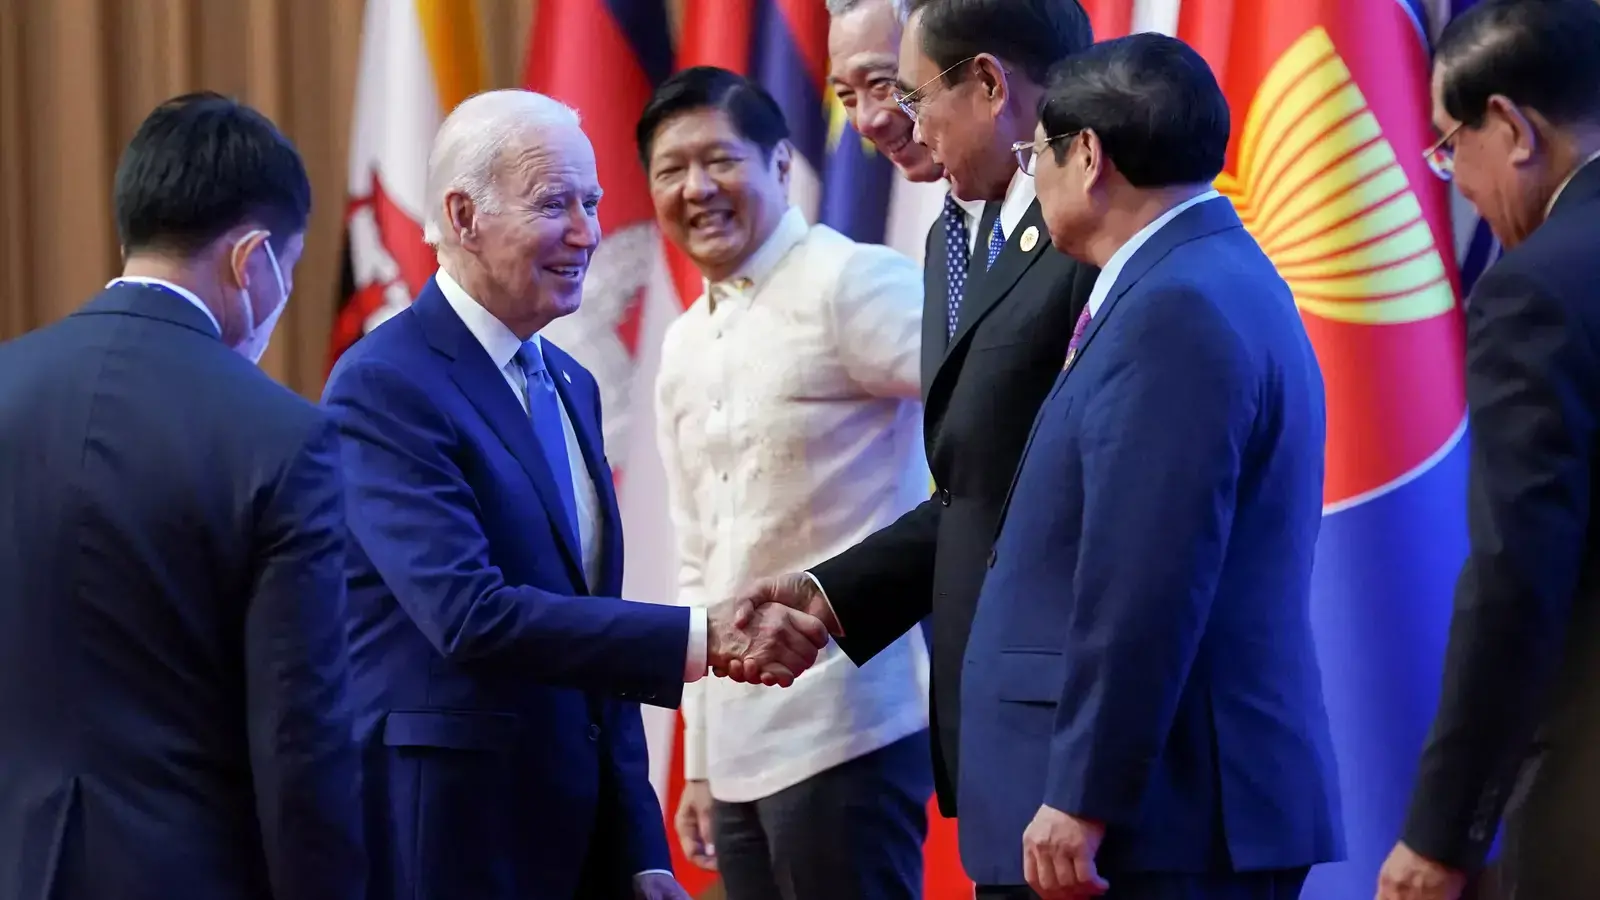 U.S. President Joe Biden greets other leaders during the 2022 ASEAN summit in Phnom Penh, Cambodia, on November 12, 2022.